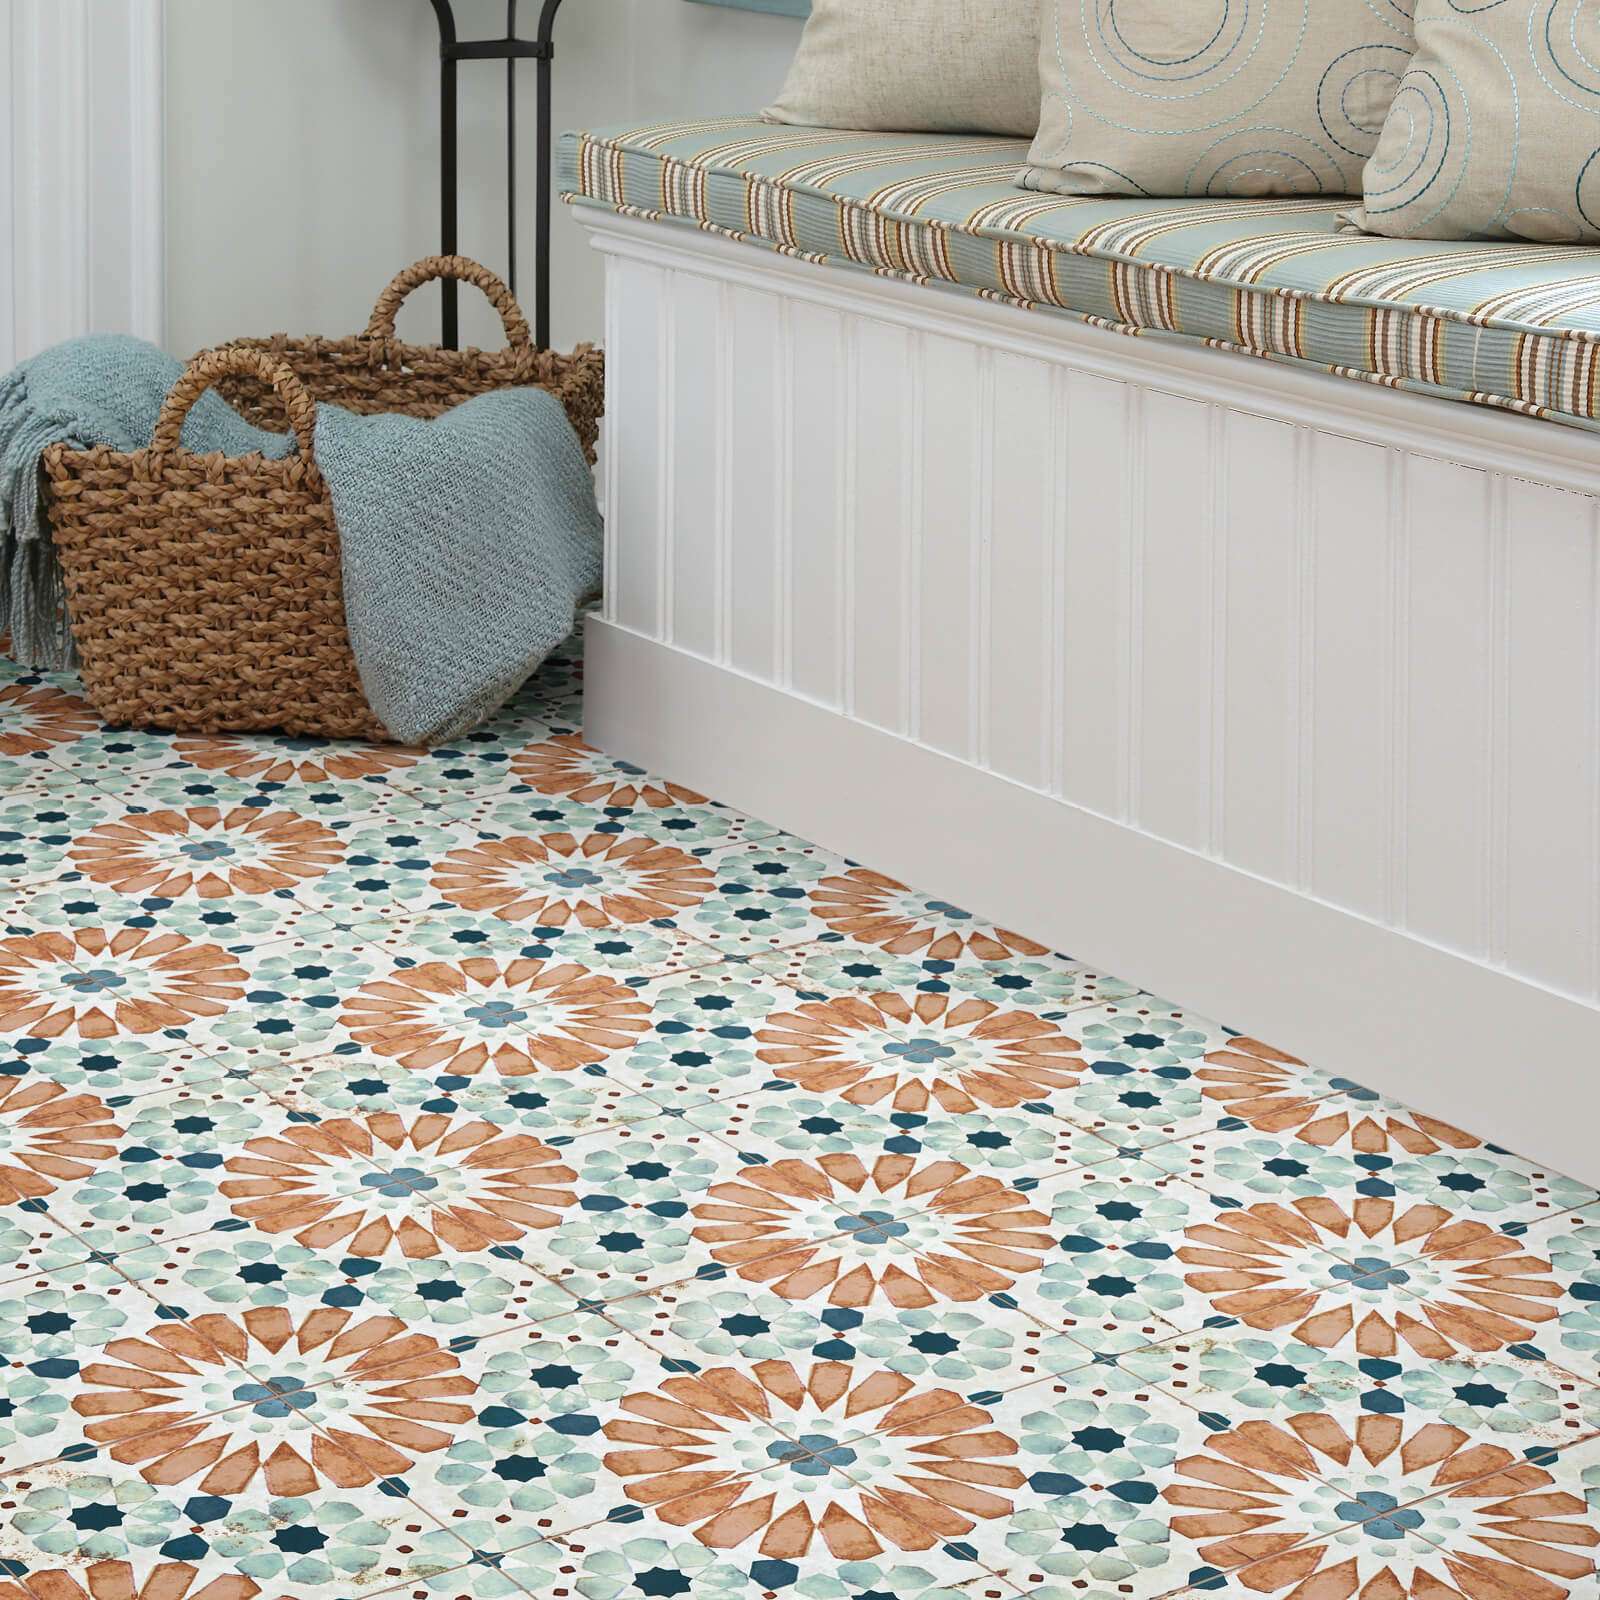 Tile flooring with flower design | Carpet And Floors For Less